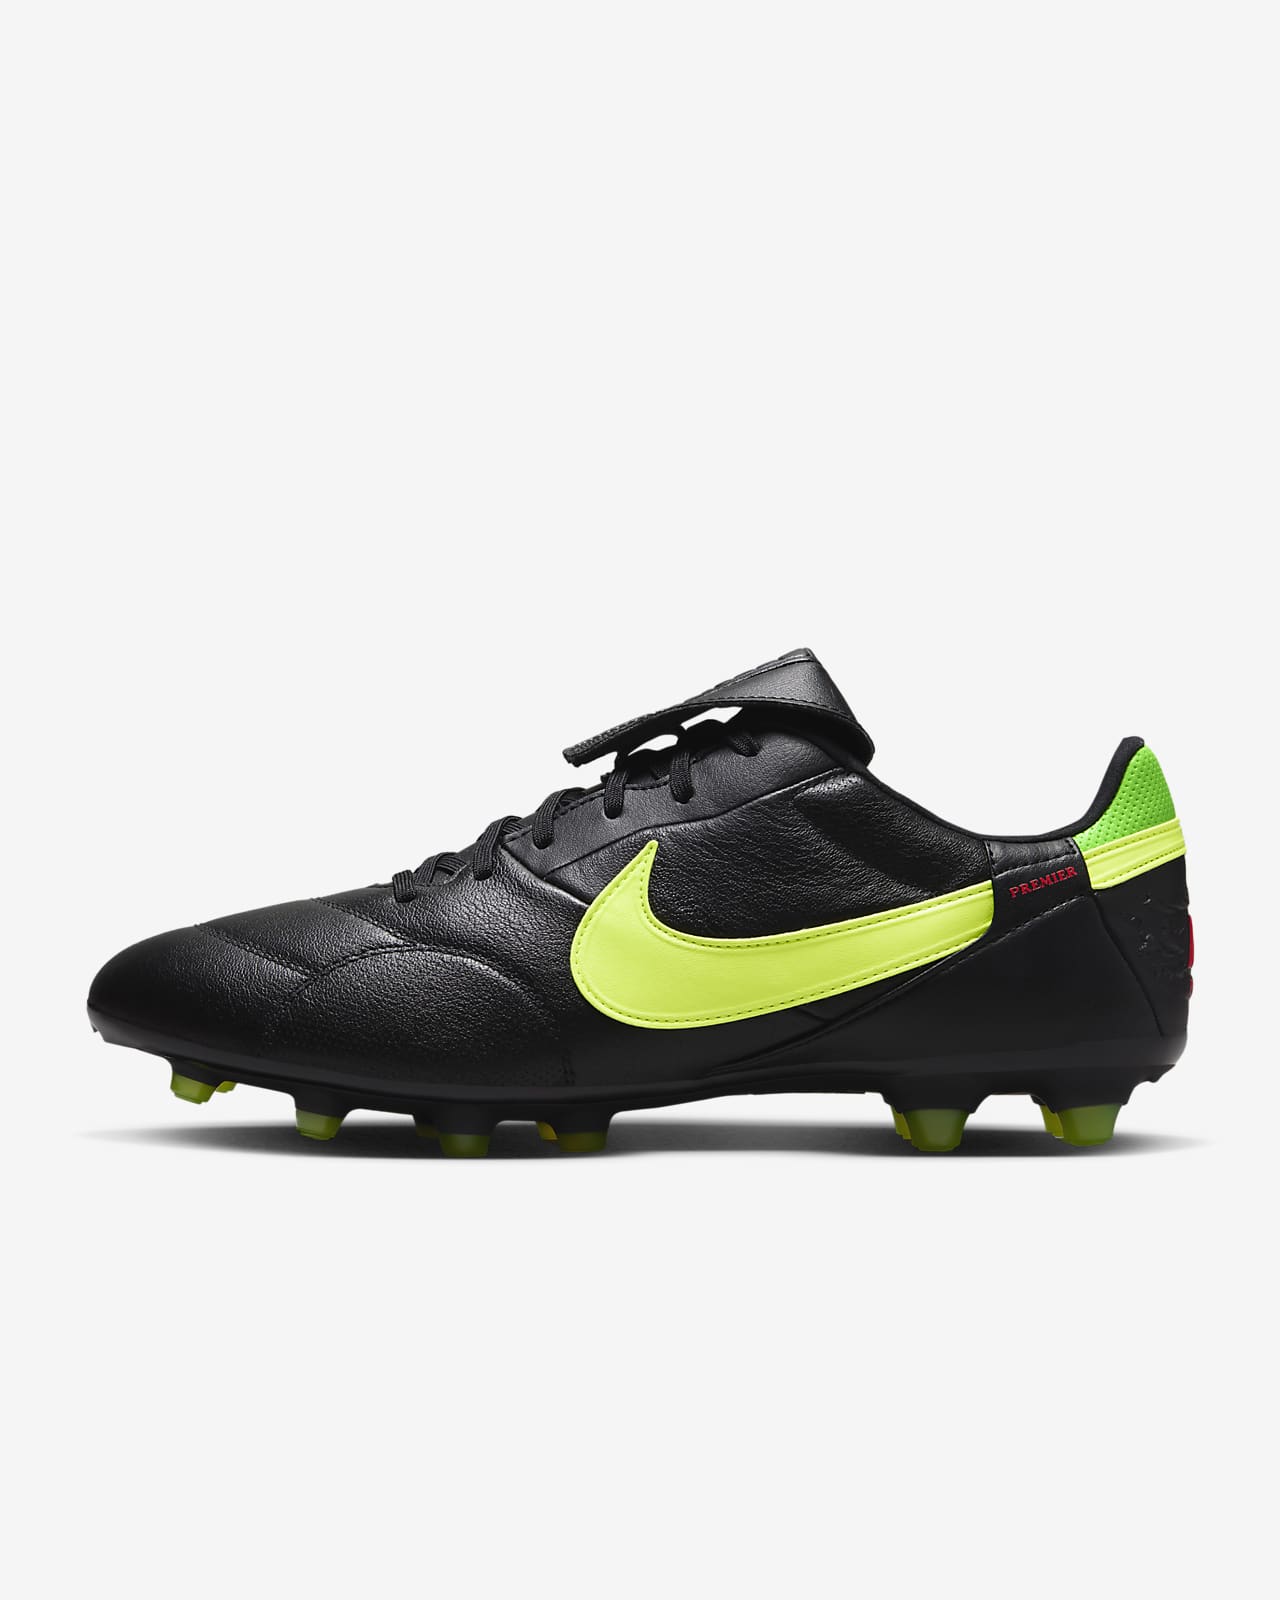 Nike Premier 3 FG Low-Top Soccer Cleats